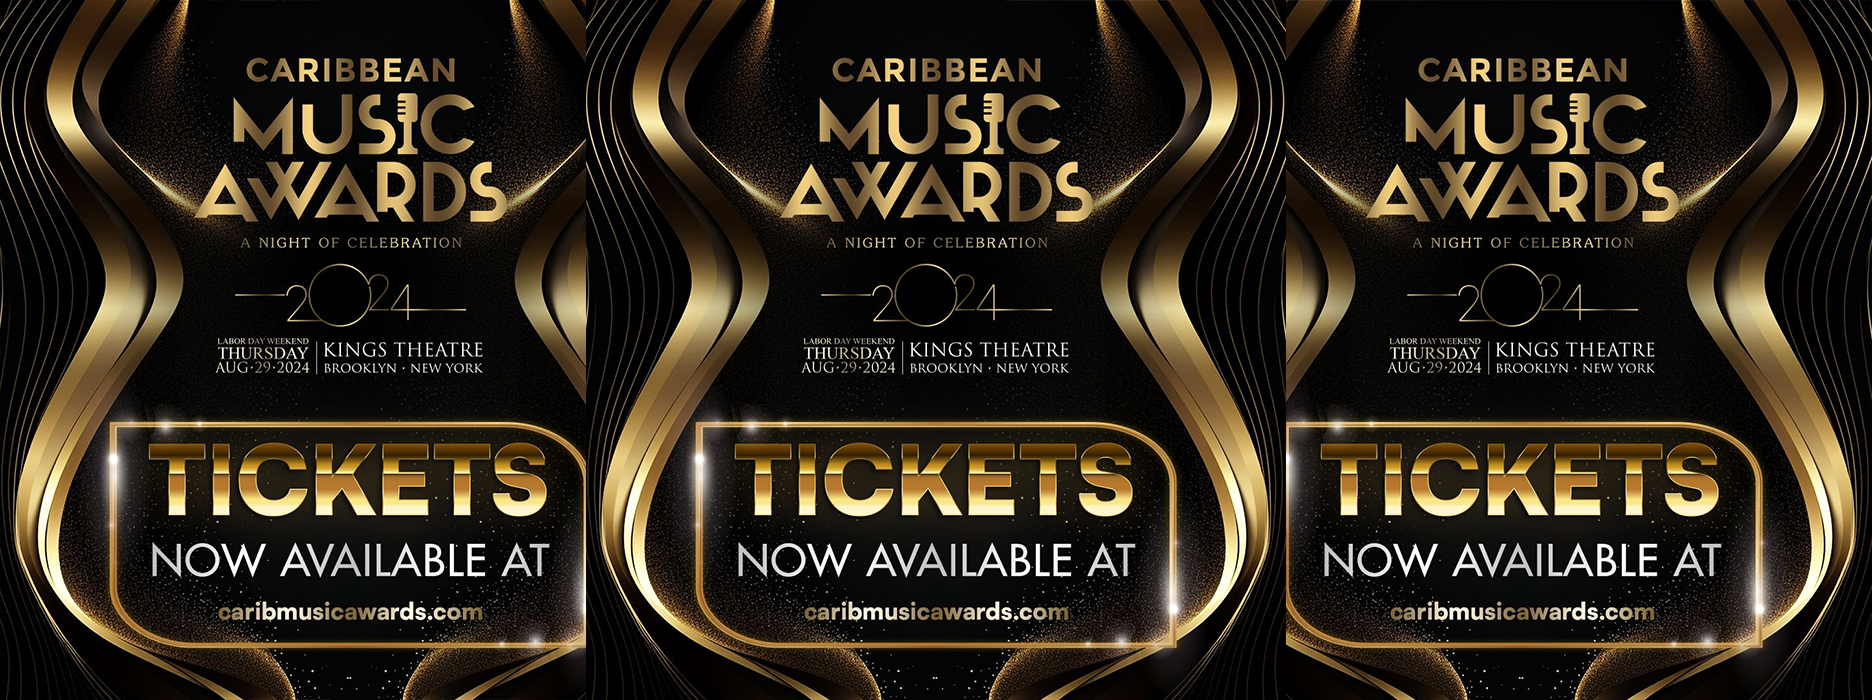 The 2nd Annual Carib Music Awards